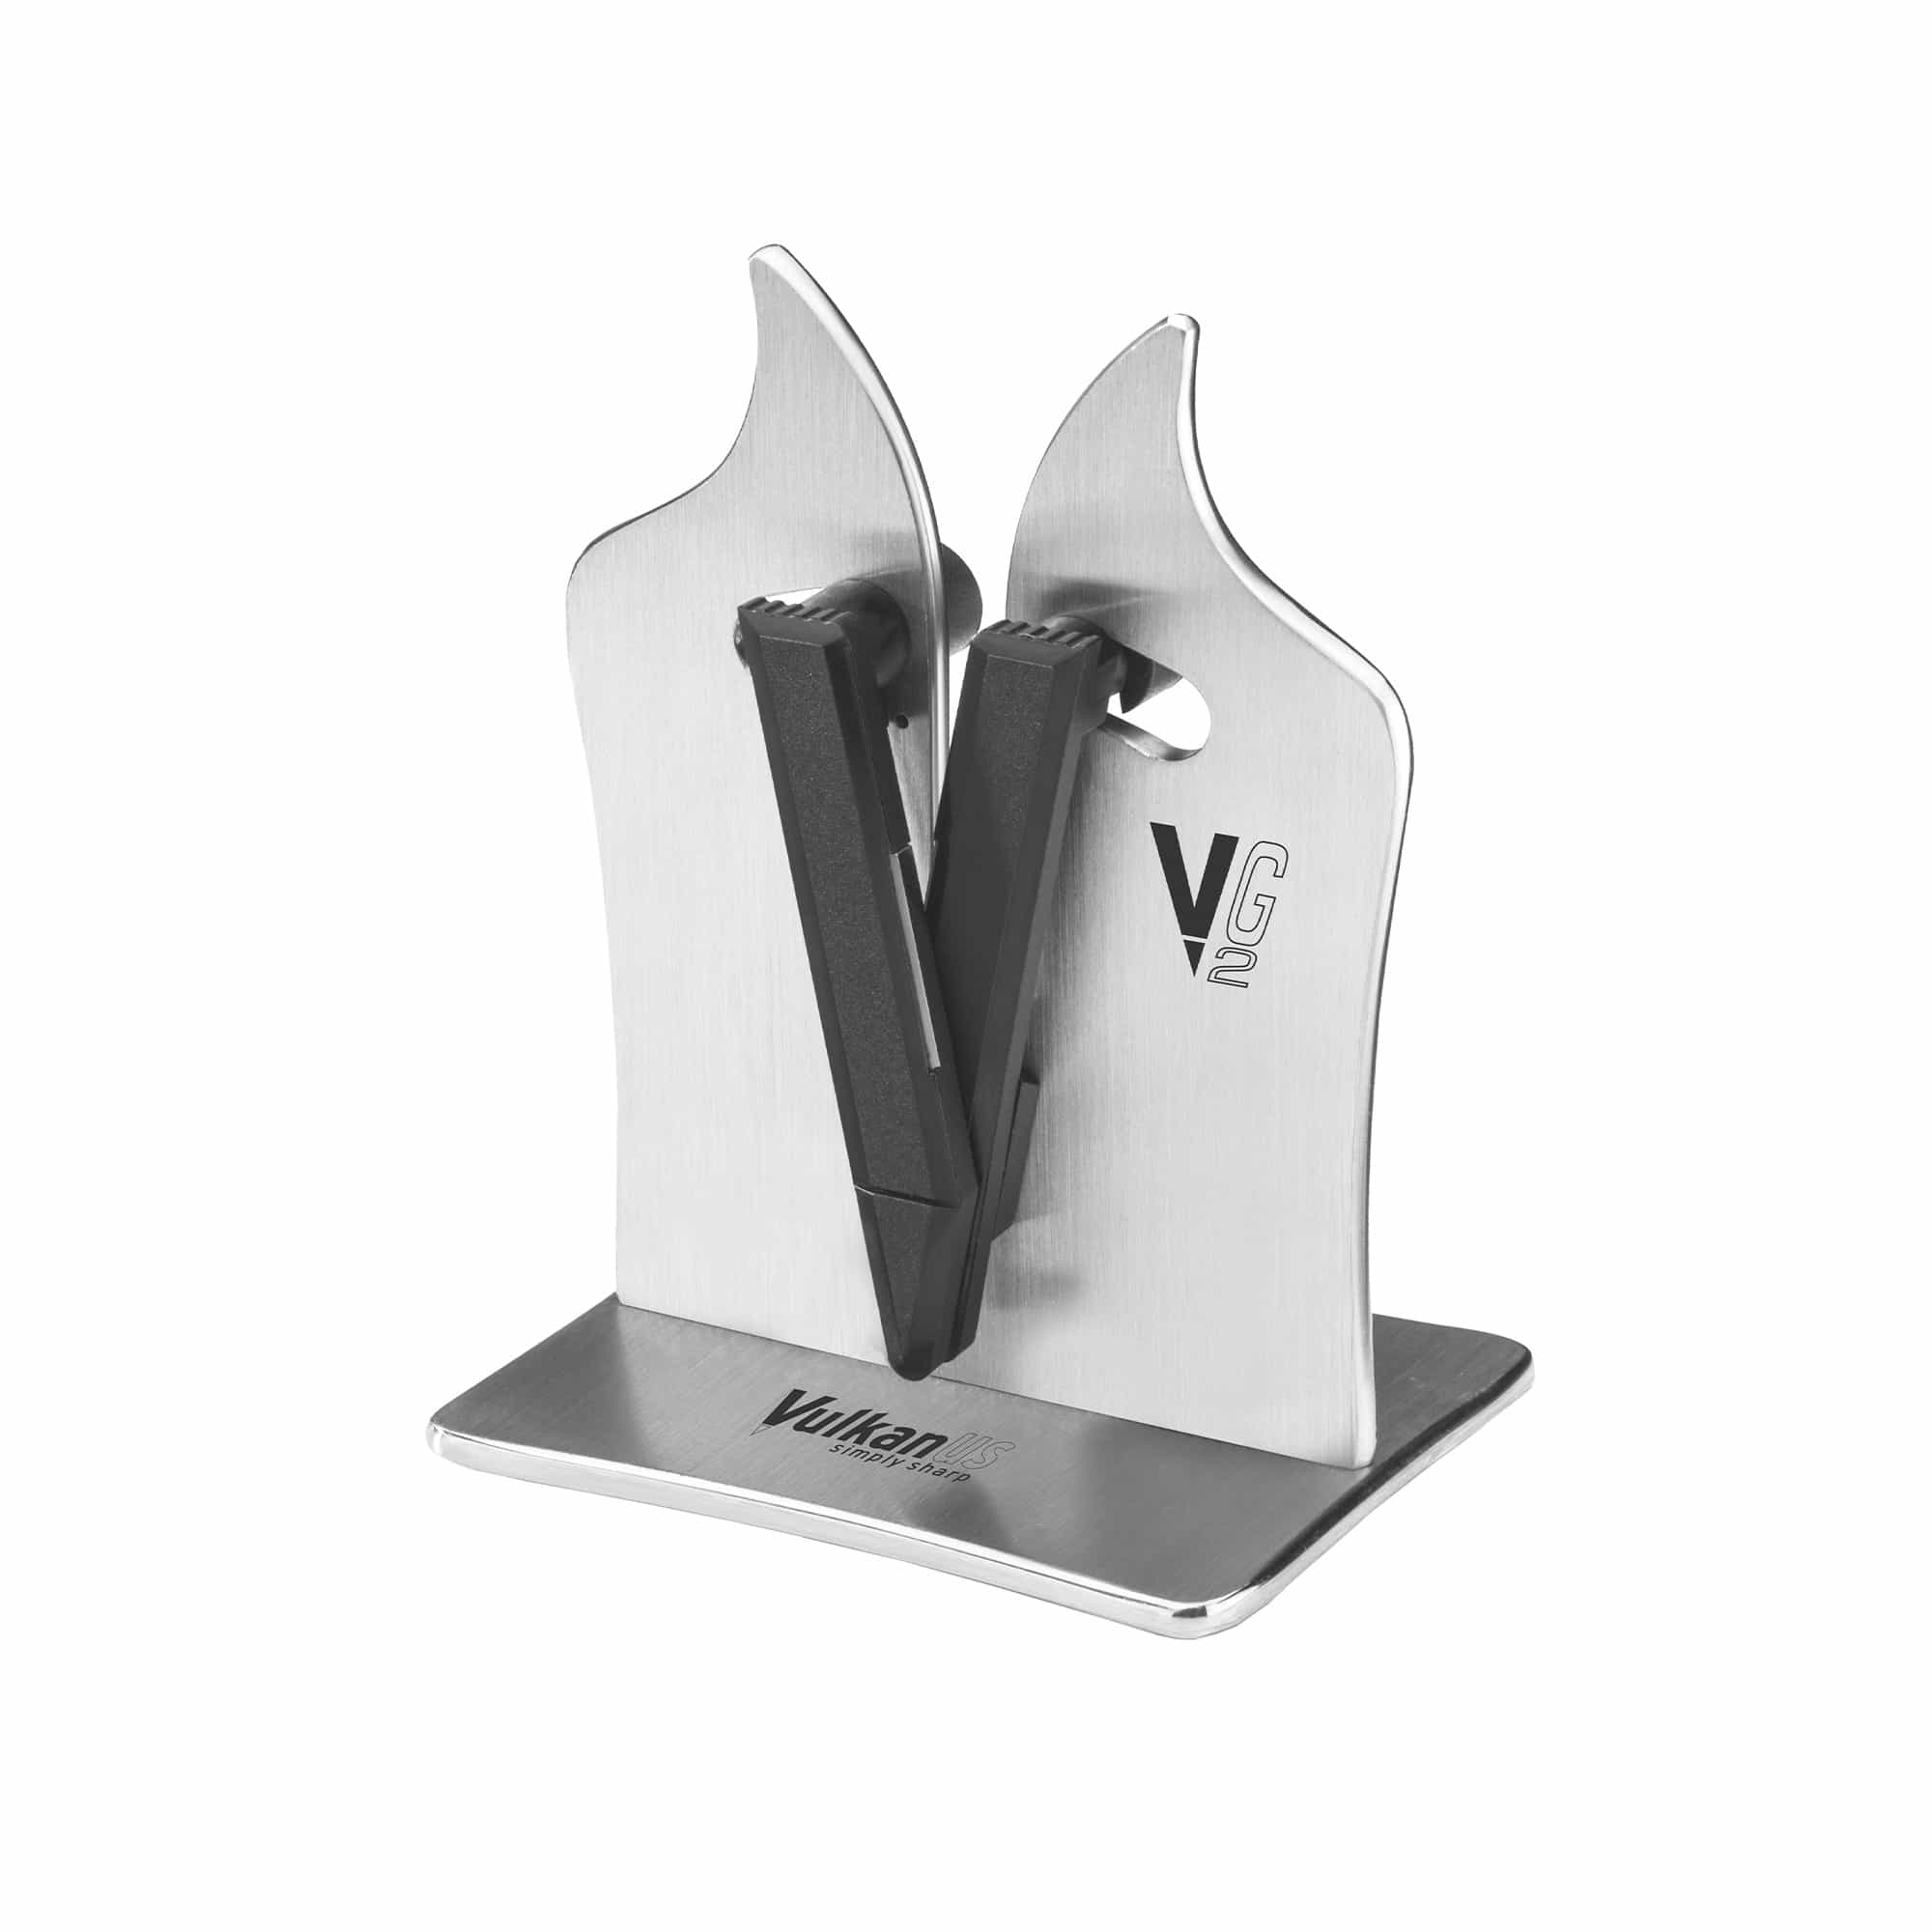 VG2 Professional Knivslip